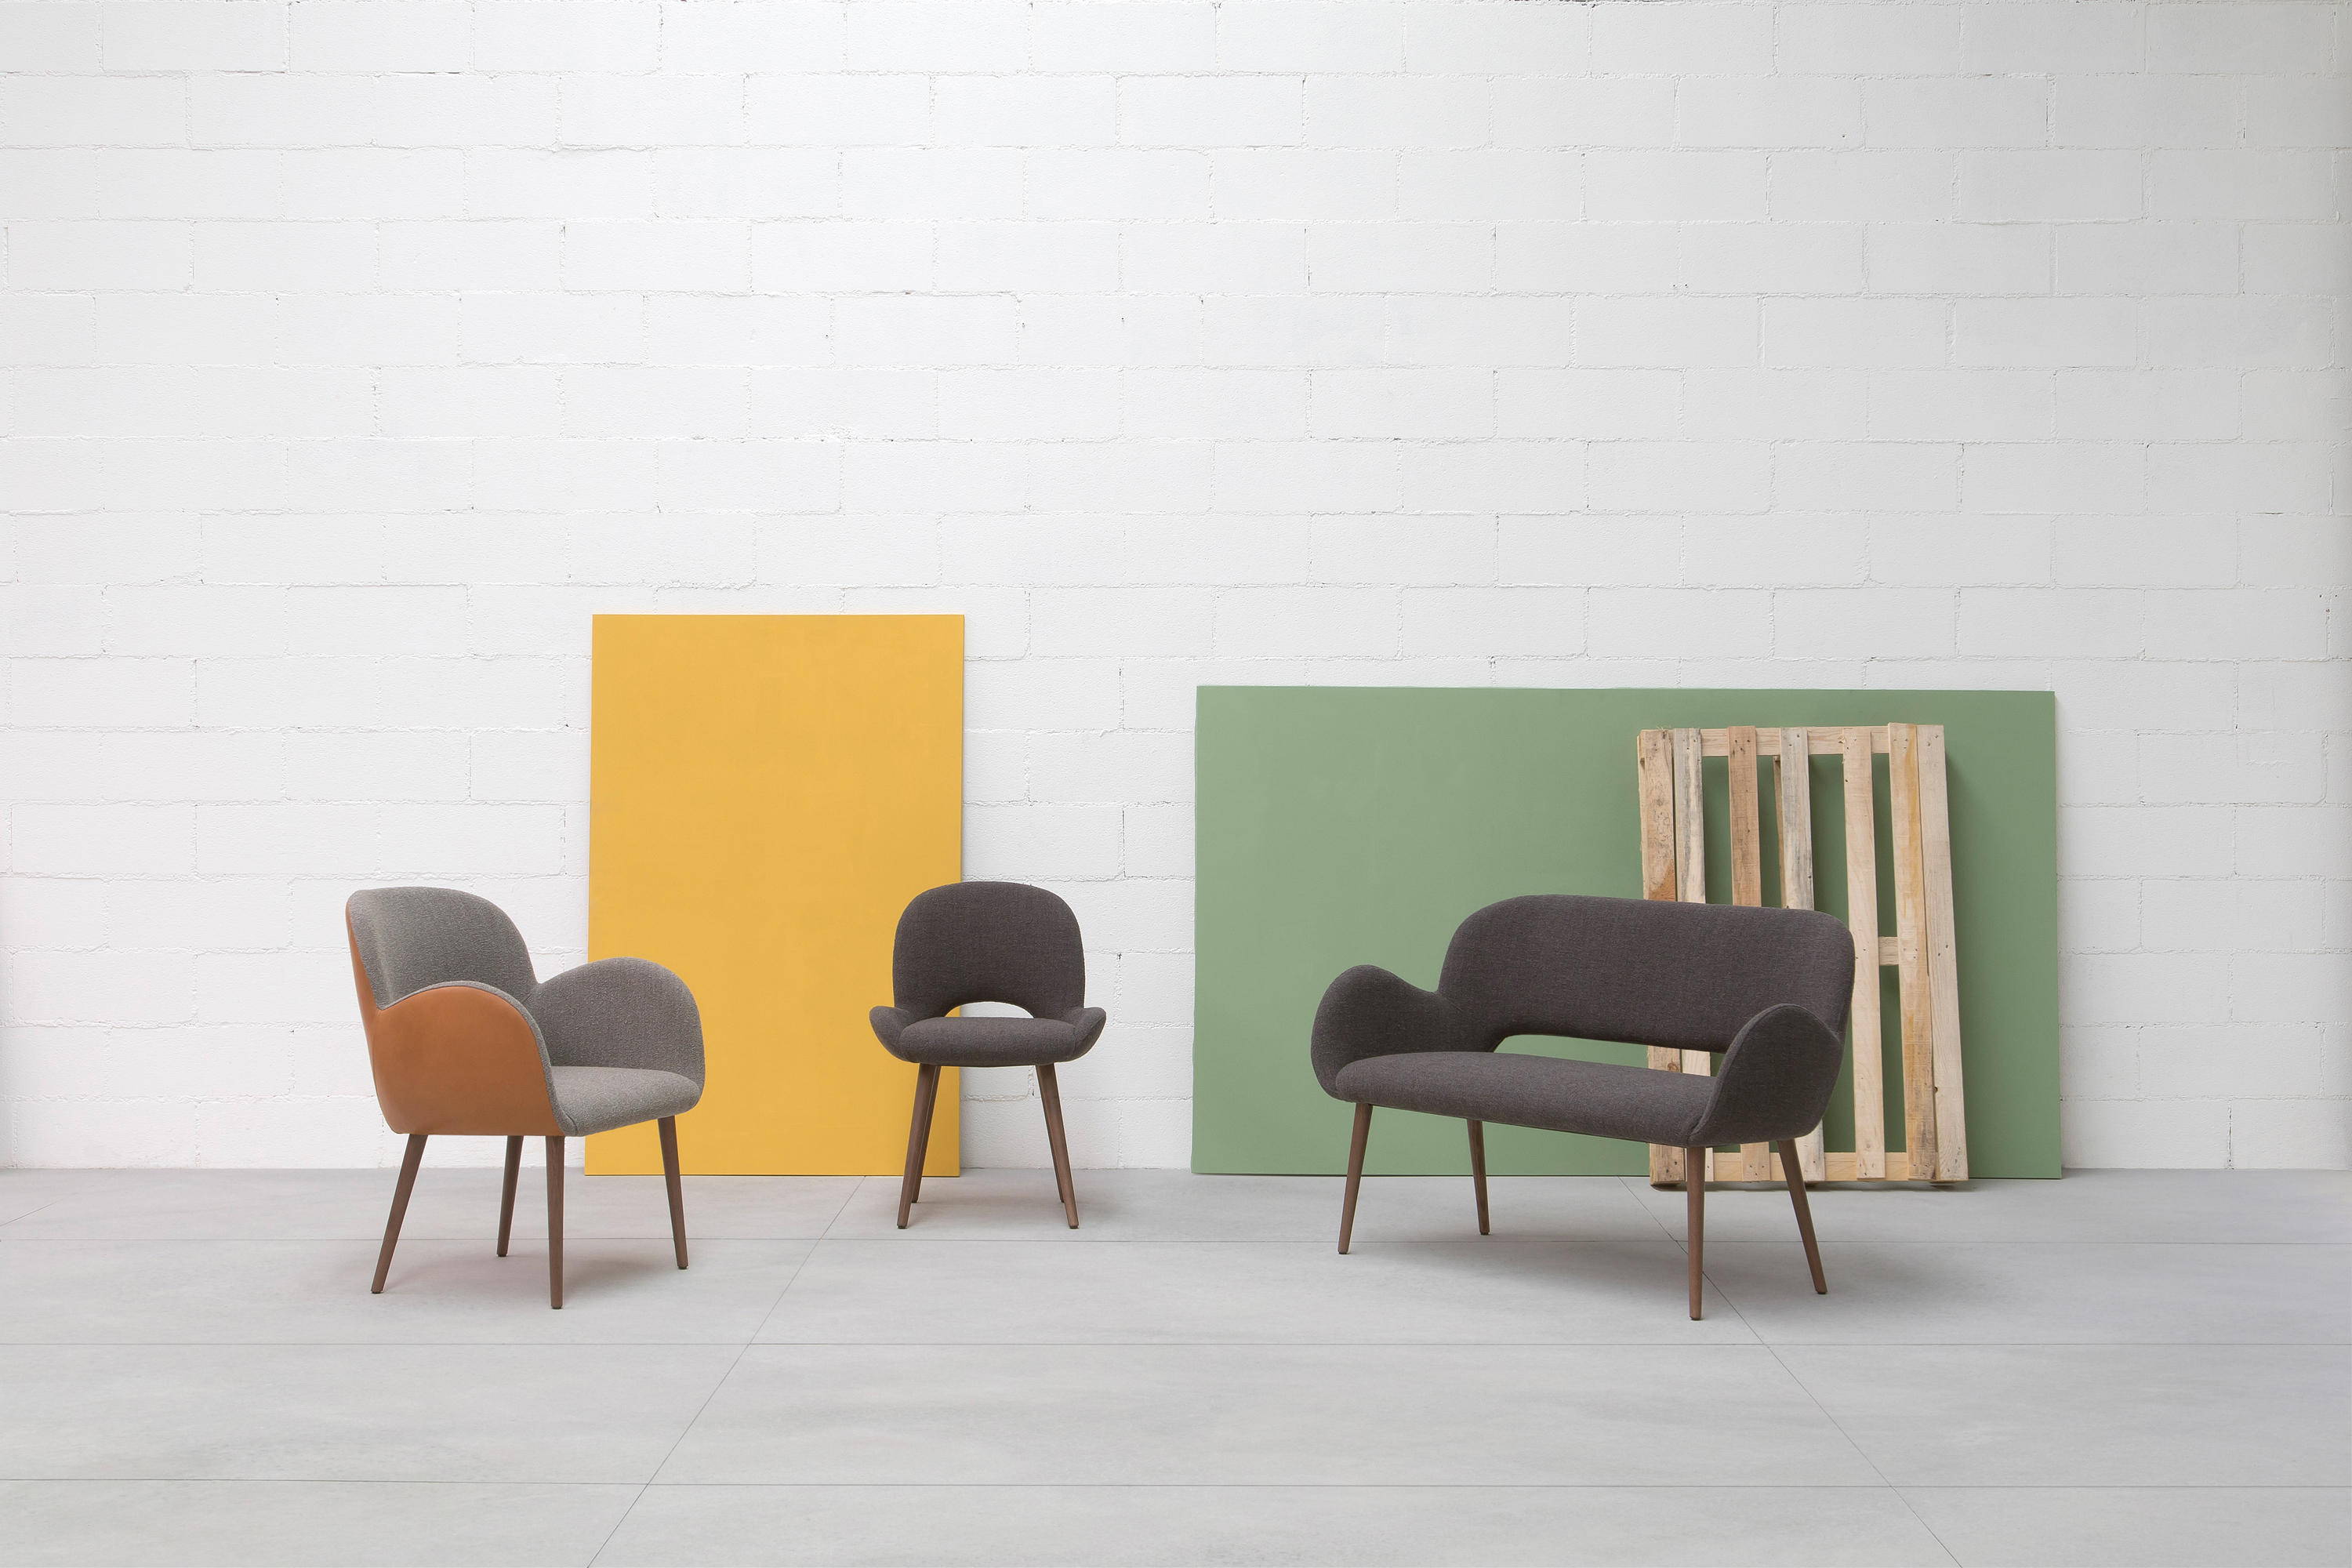 Bliss-01 base 106 & designer furniture | Architonic